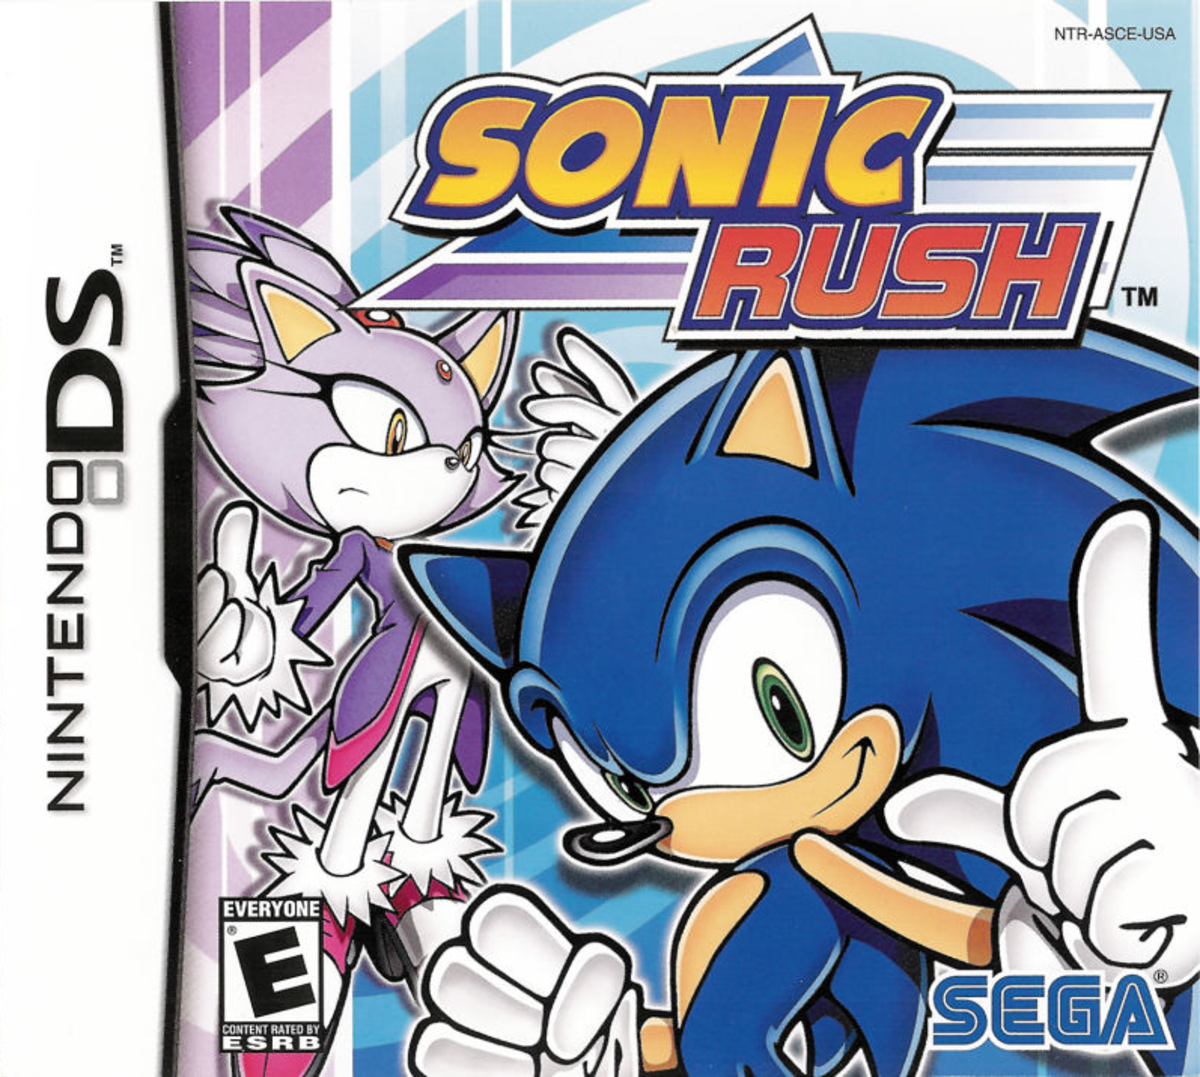 "Sonic Rush" Cover Art